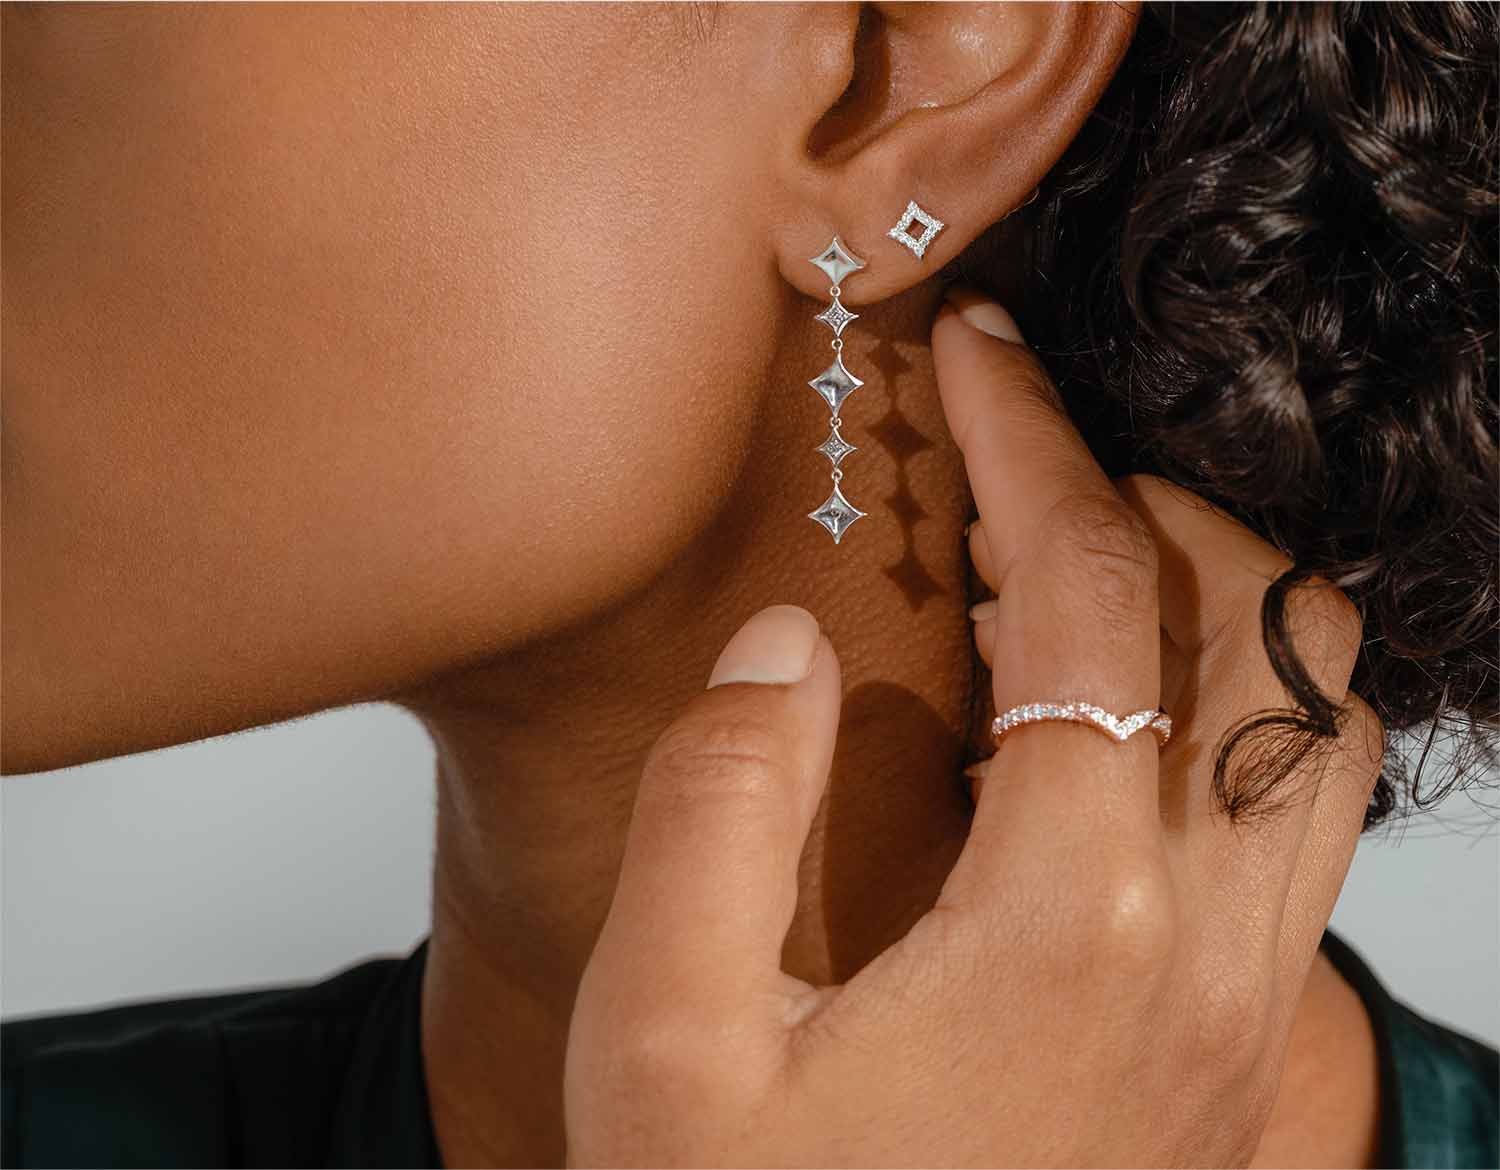 Woman wearing distinctive diamond earrings and chevron wedding ring